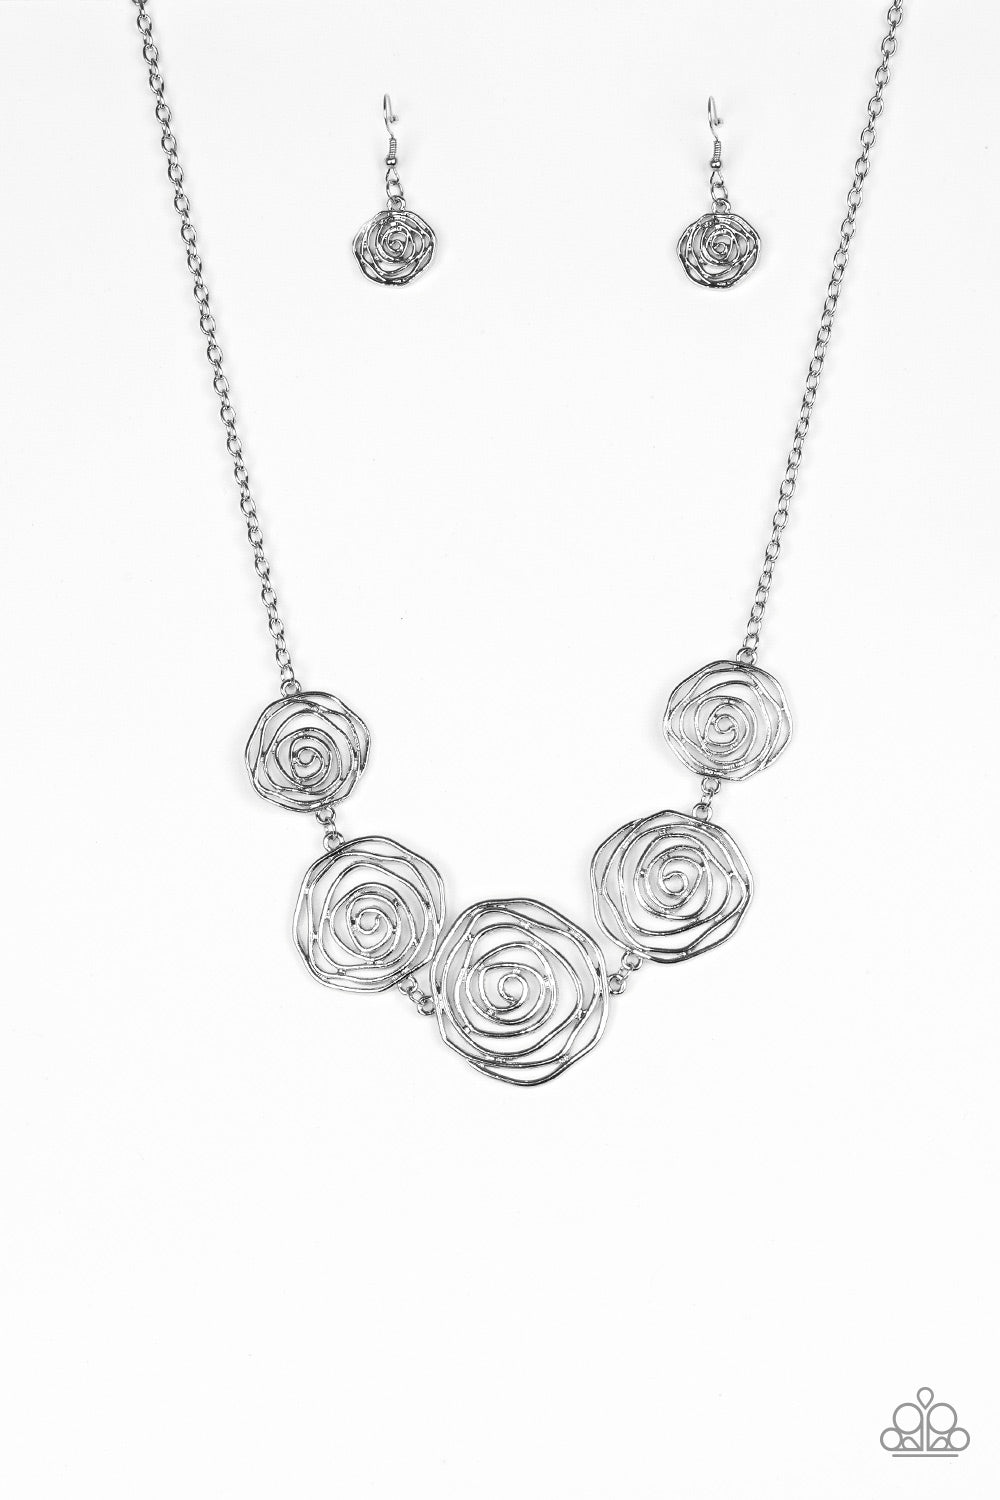 Paparazzi Accessories - Rosy Rosette - Silver Necklace